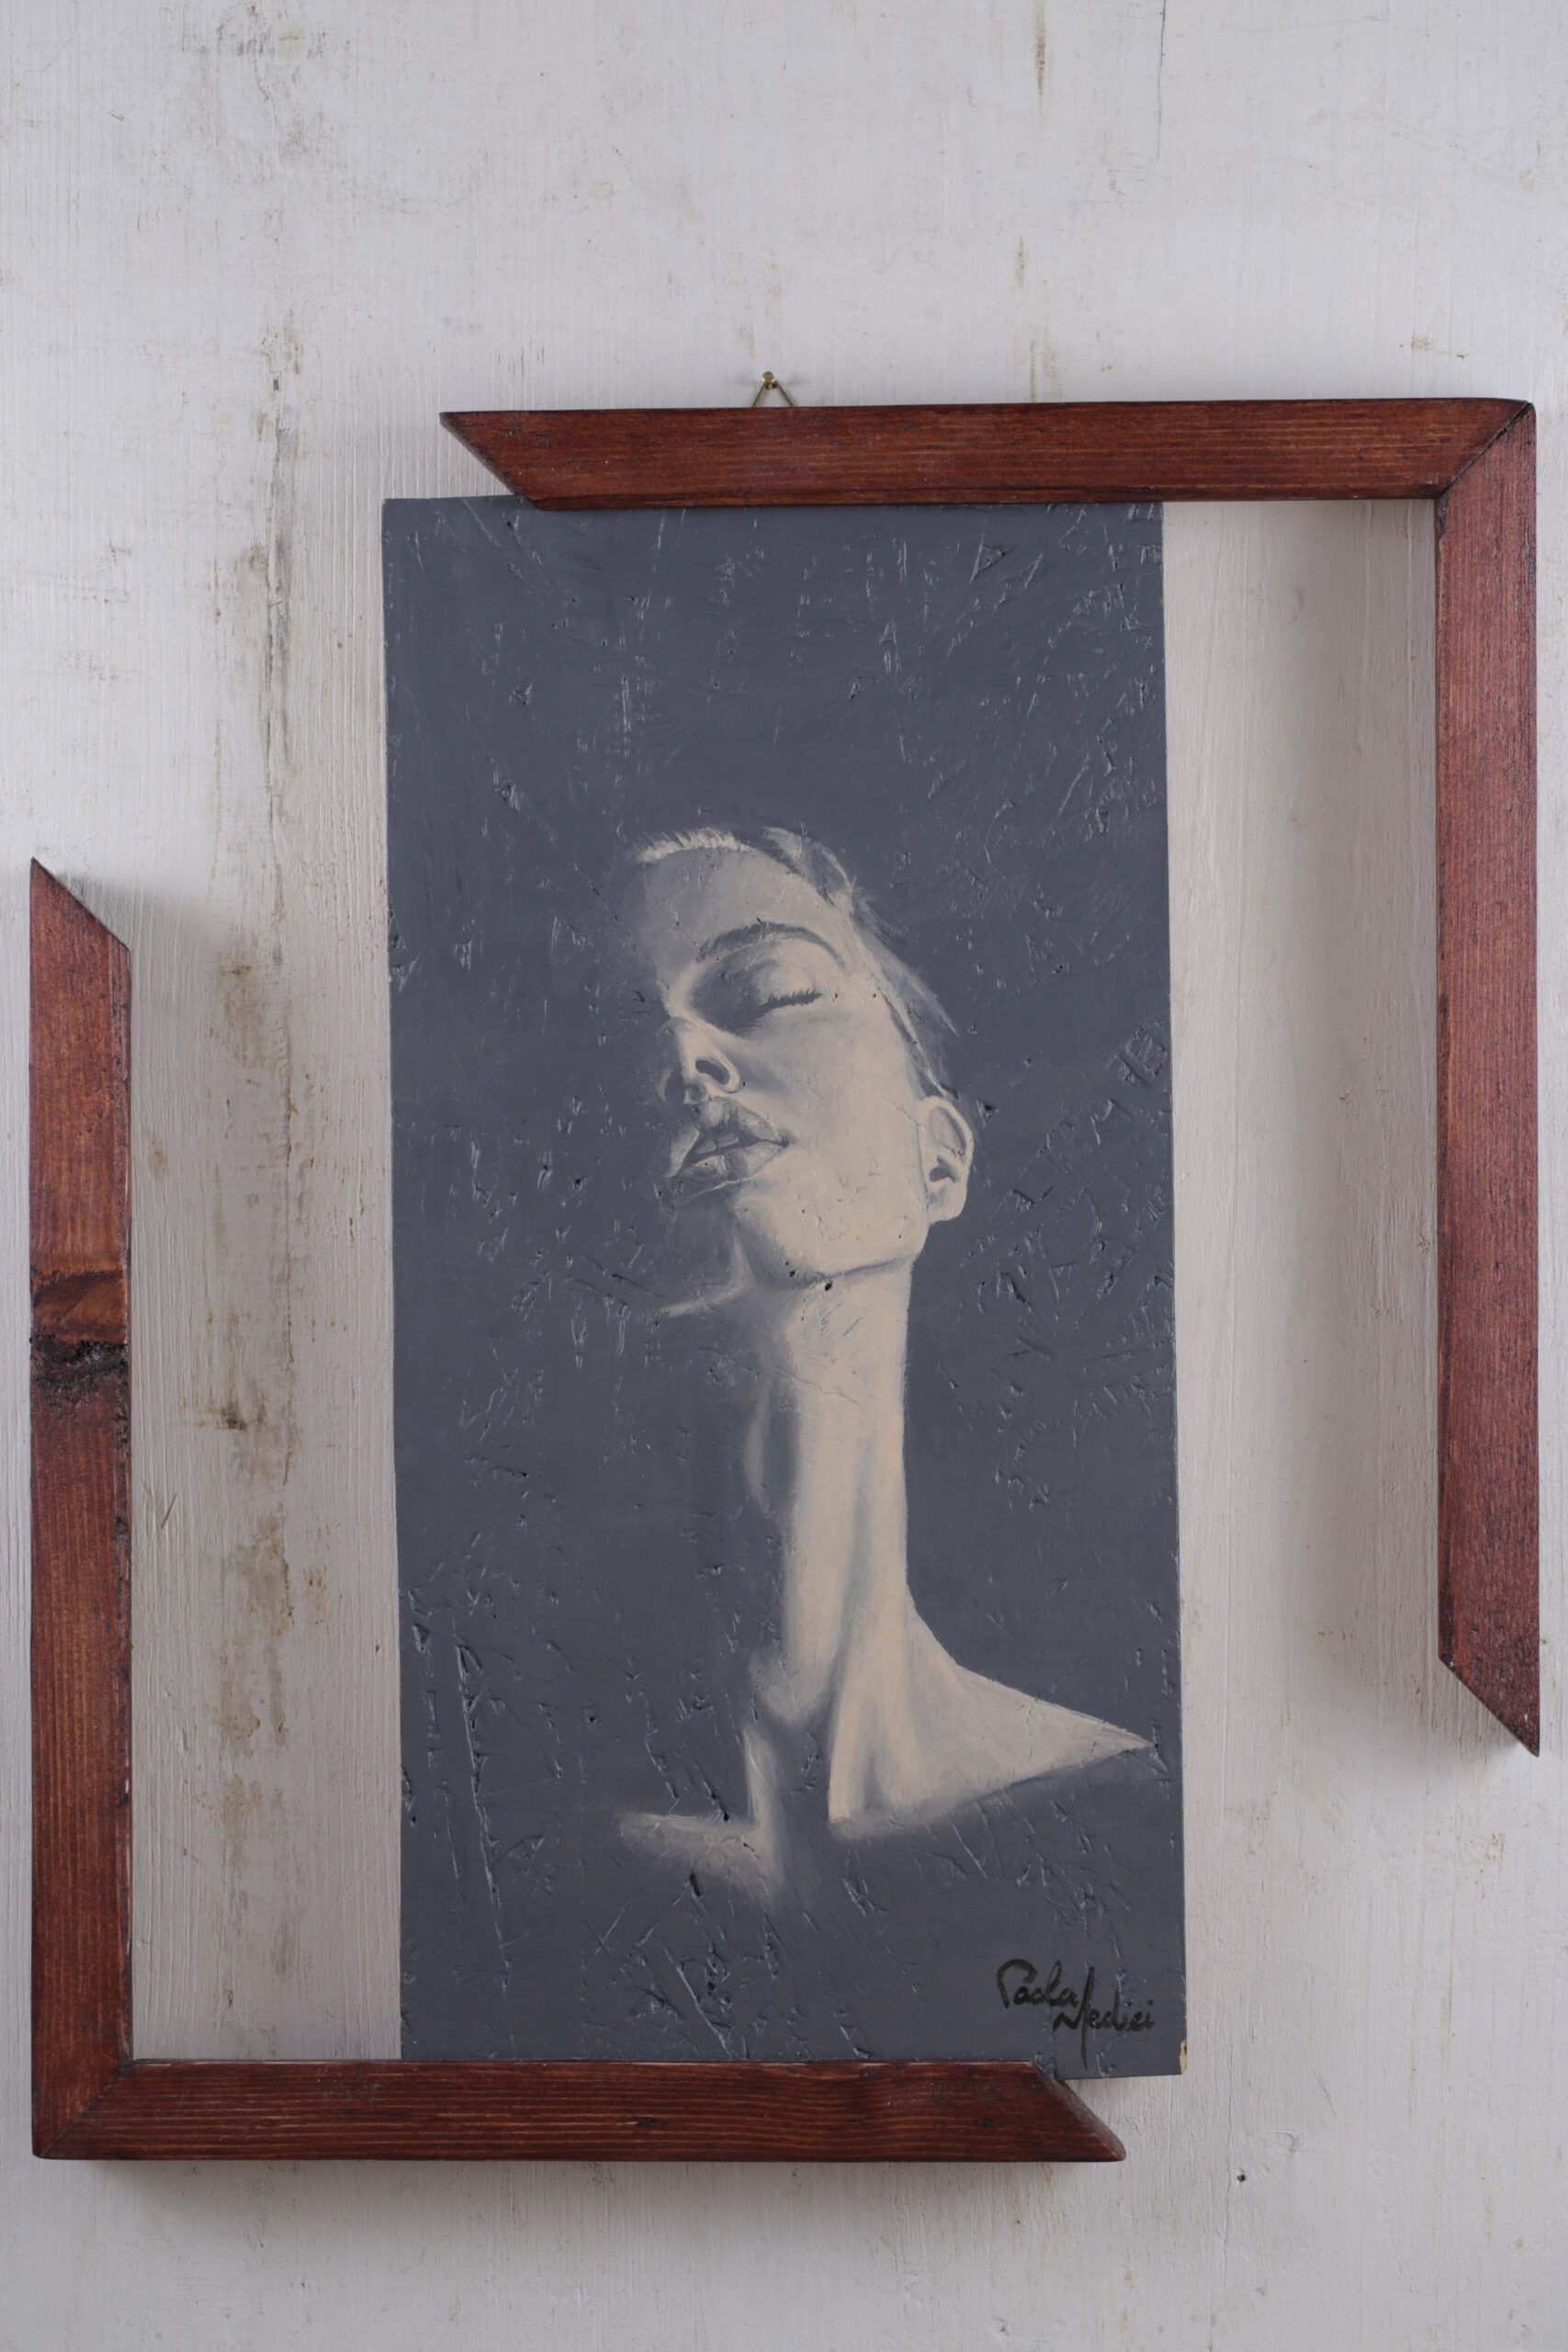 4me4you features the artist Paola Medici – “I am not a portrait″.